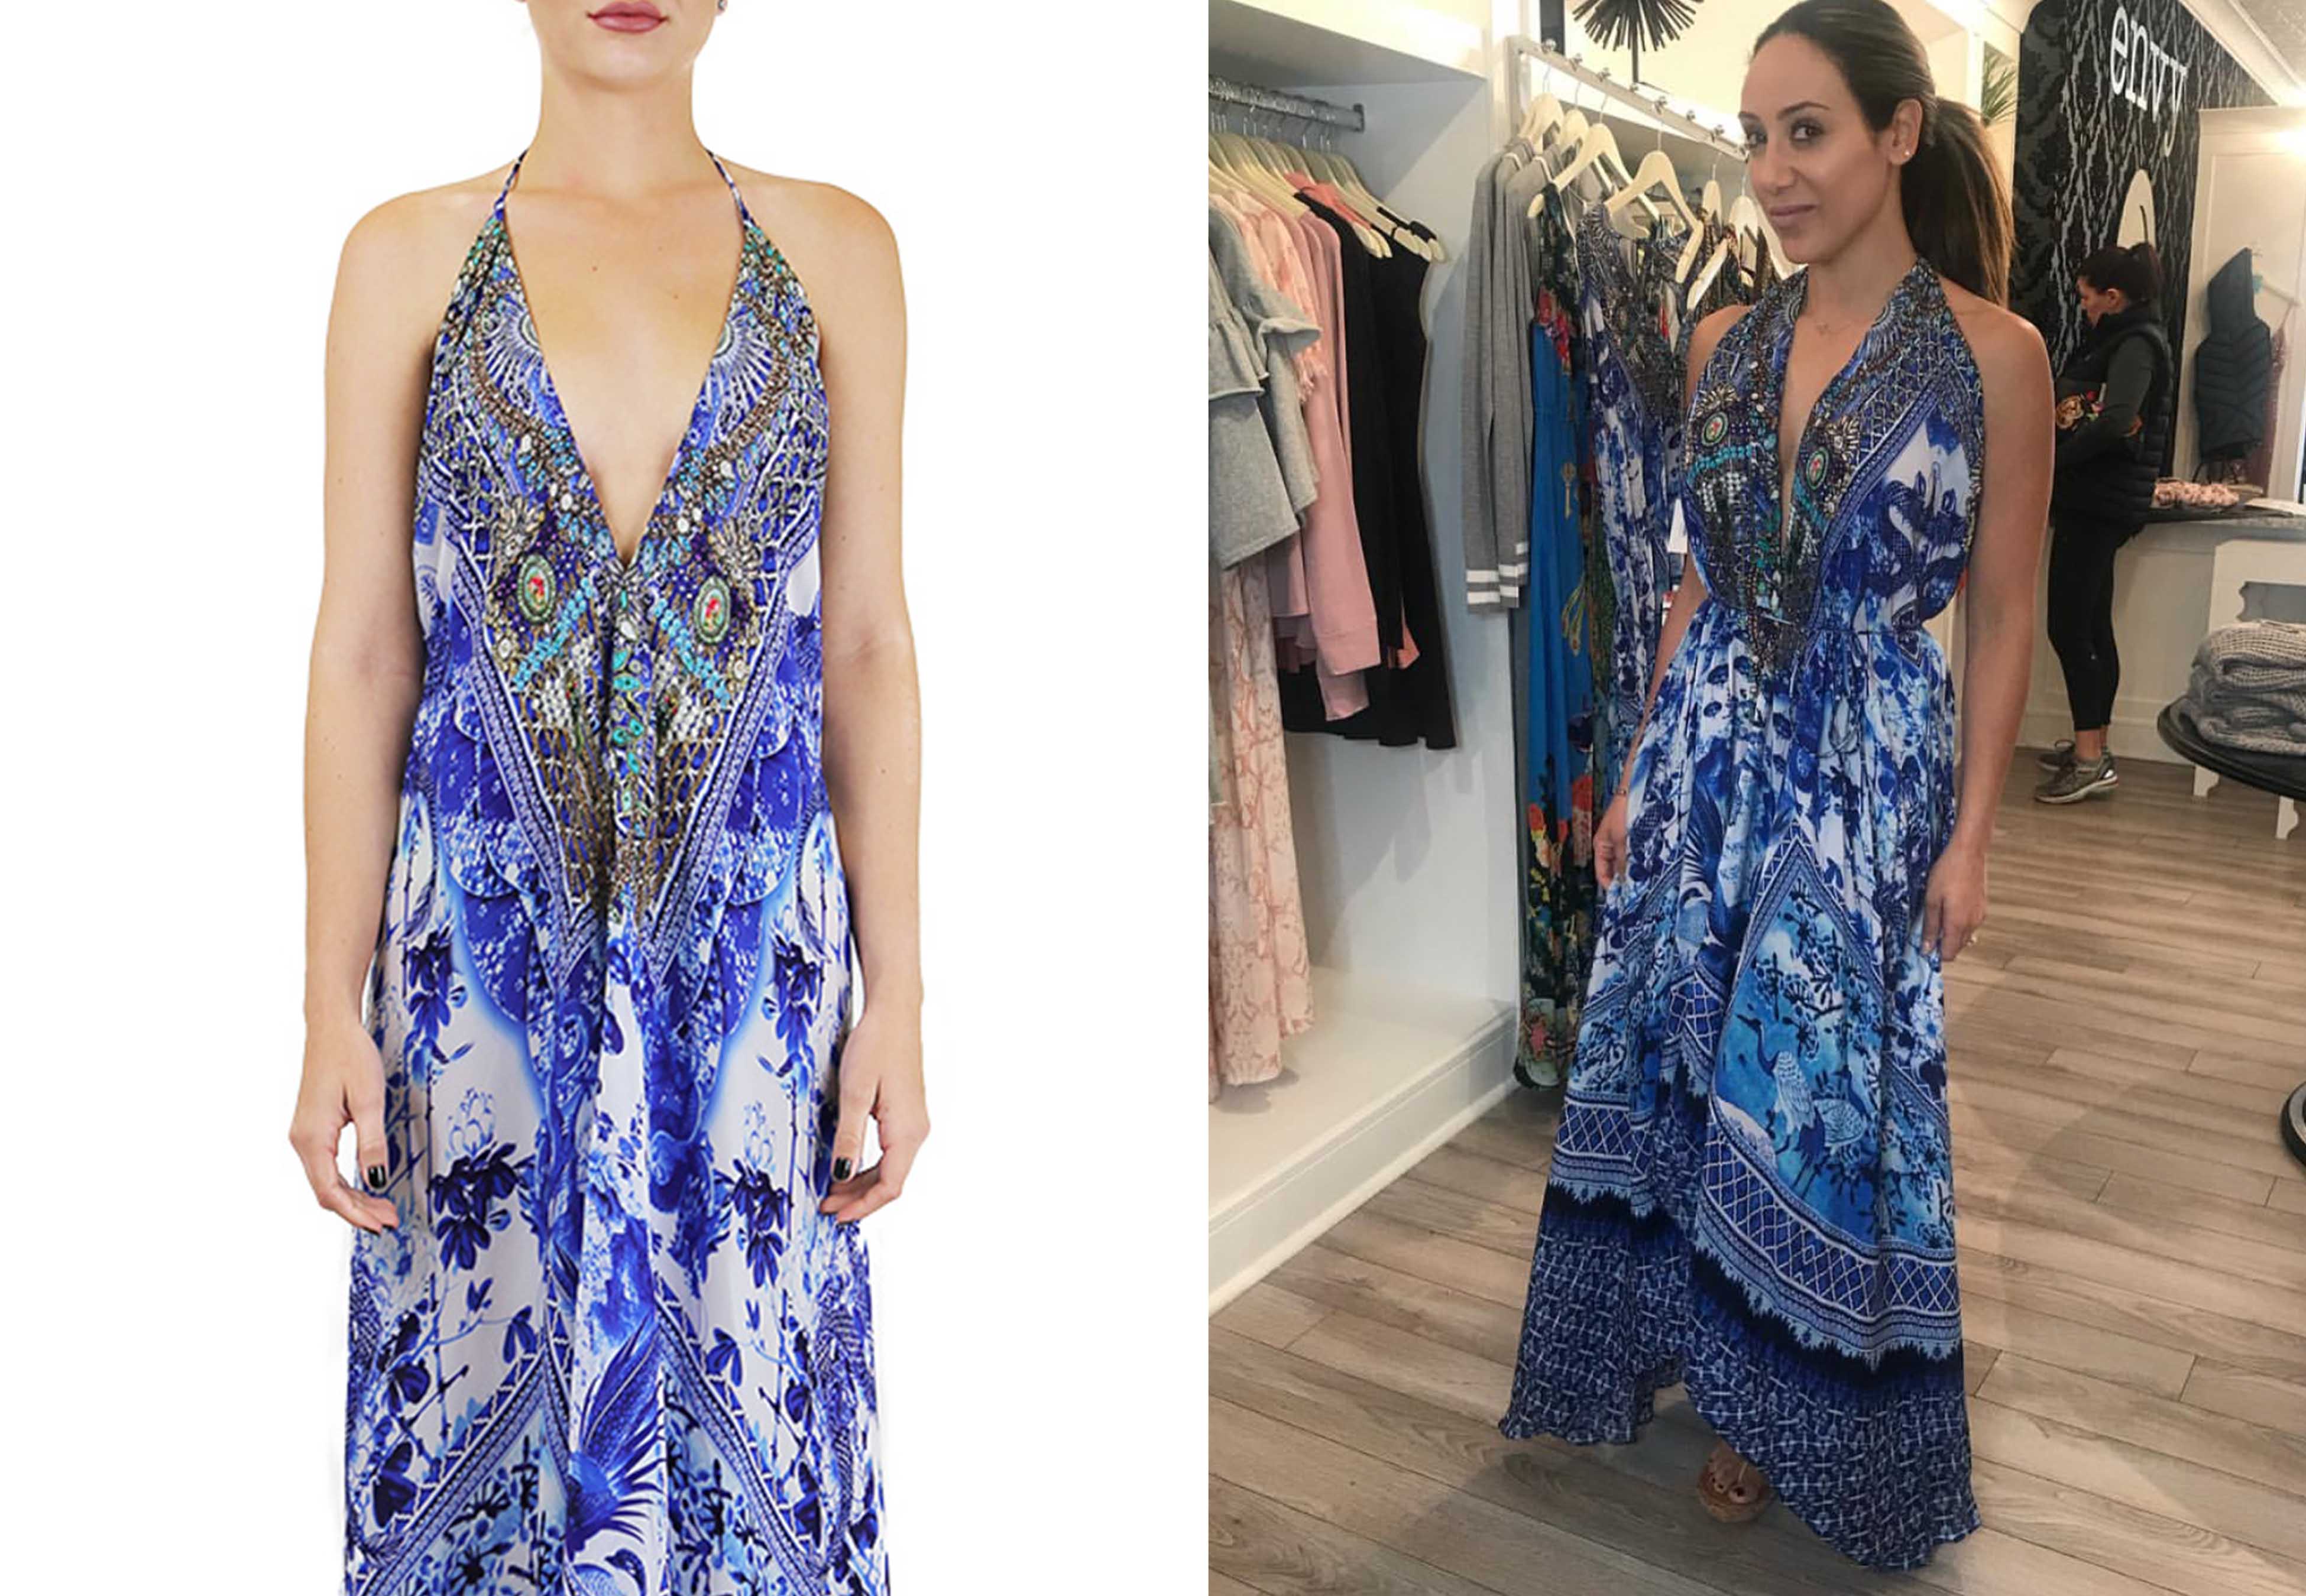 China blue and white maxi dress on Melissa Gorga